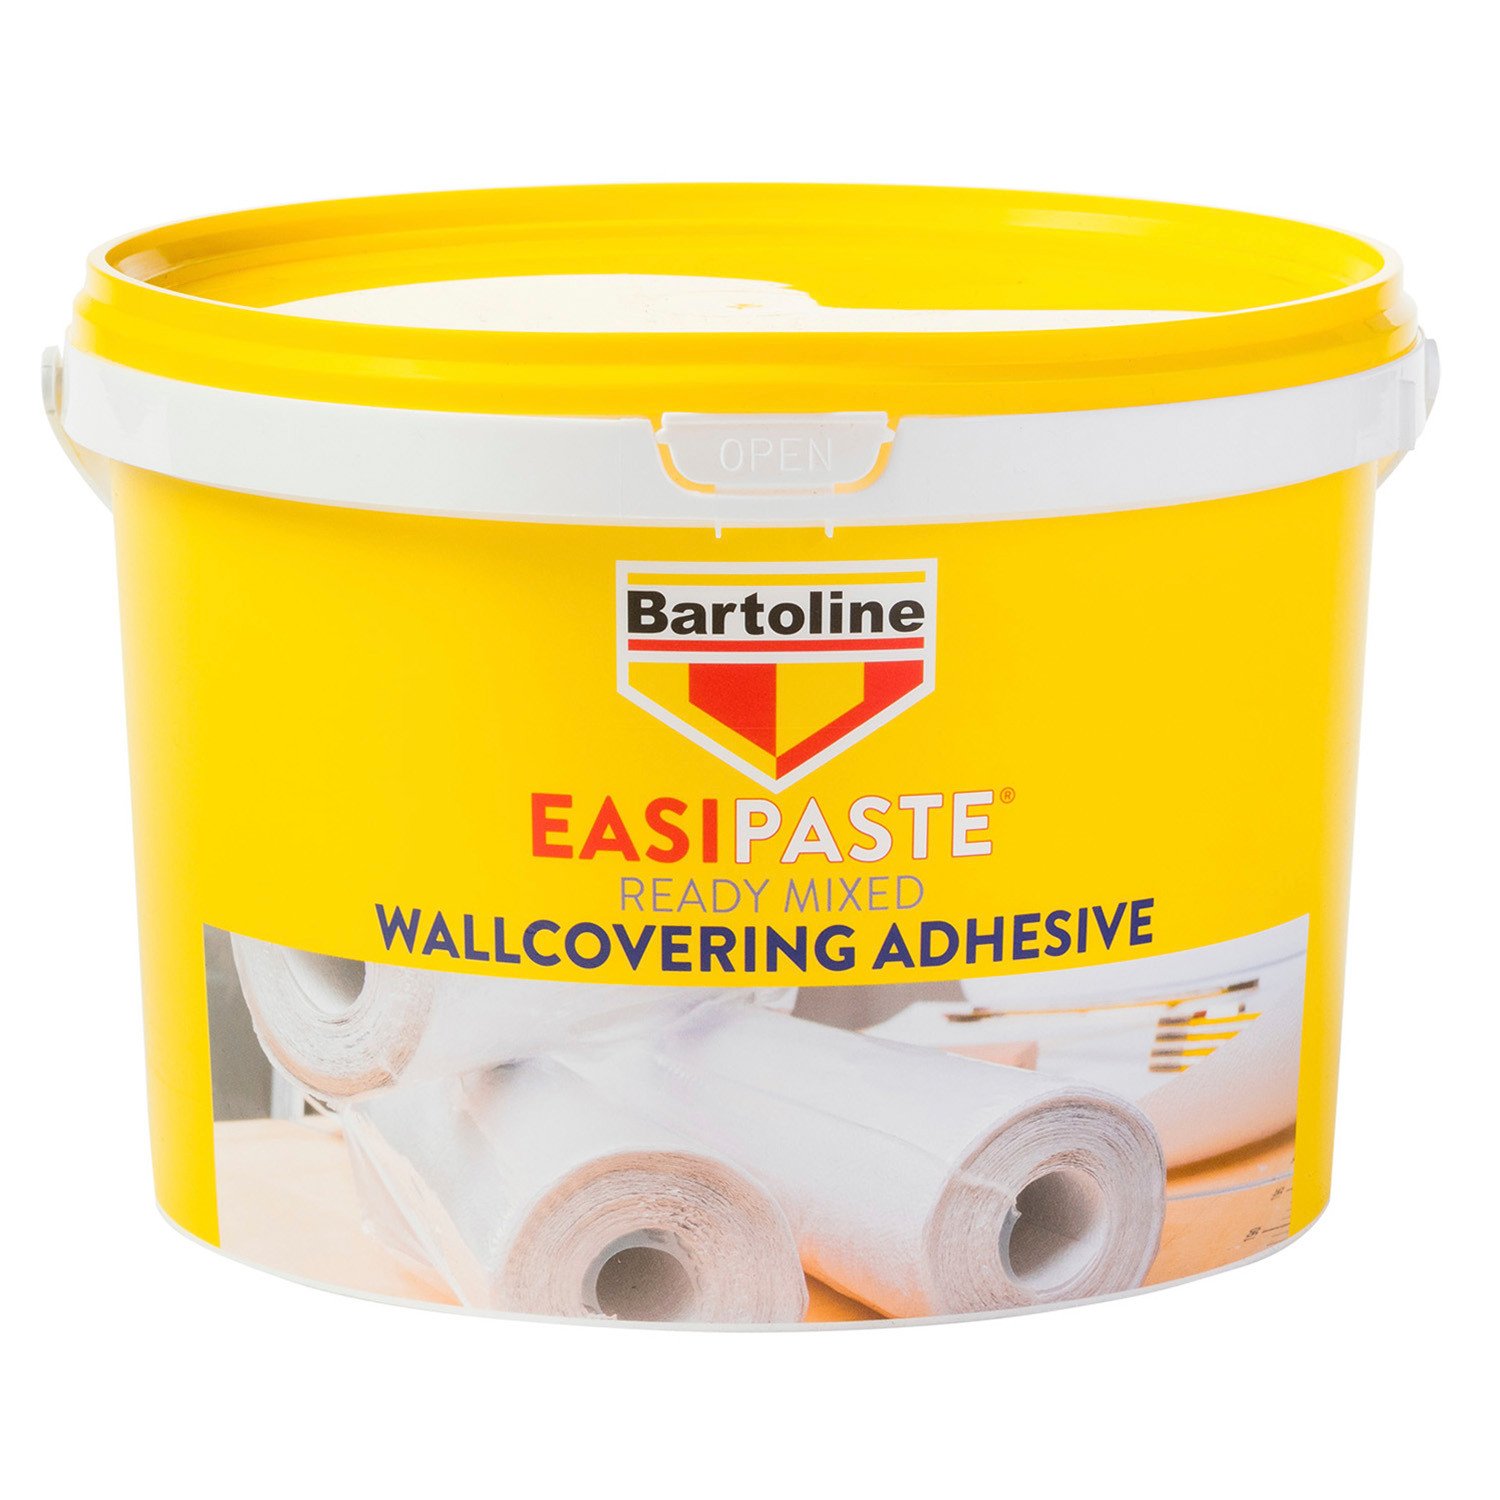 Bartoline Easipaste Ready Mixed Wallpaper Adhesive 2.5L Image